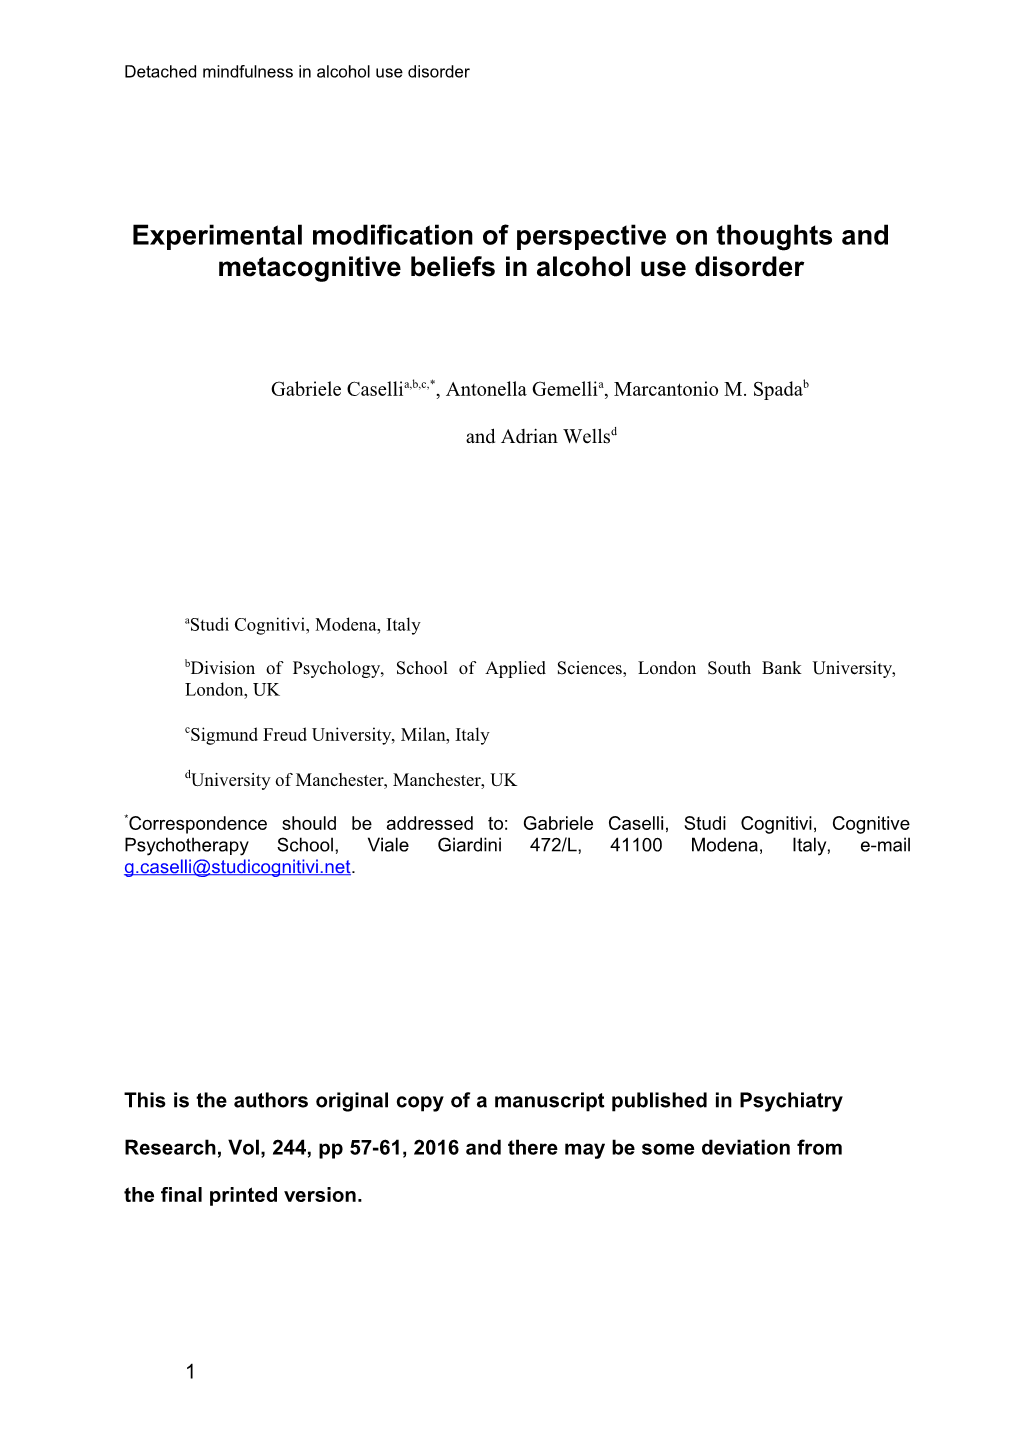 Caselli, G., Gemelli, A., Wells, A. & Spada, M. M. Experimental Modification of Metacognitive